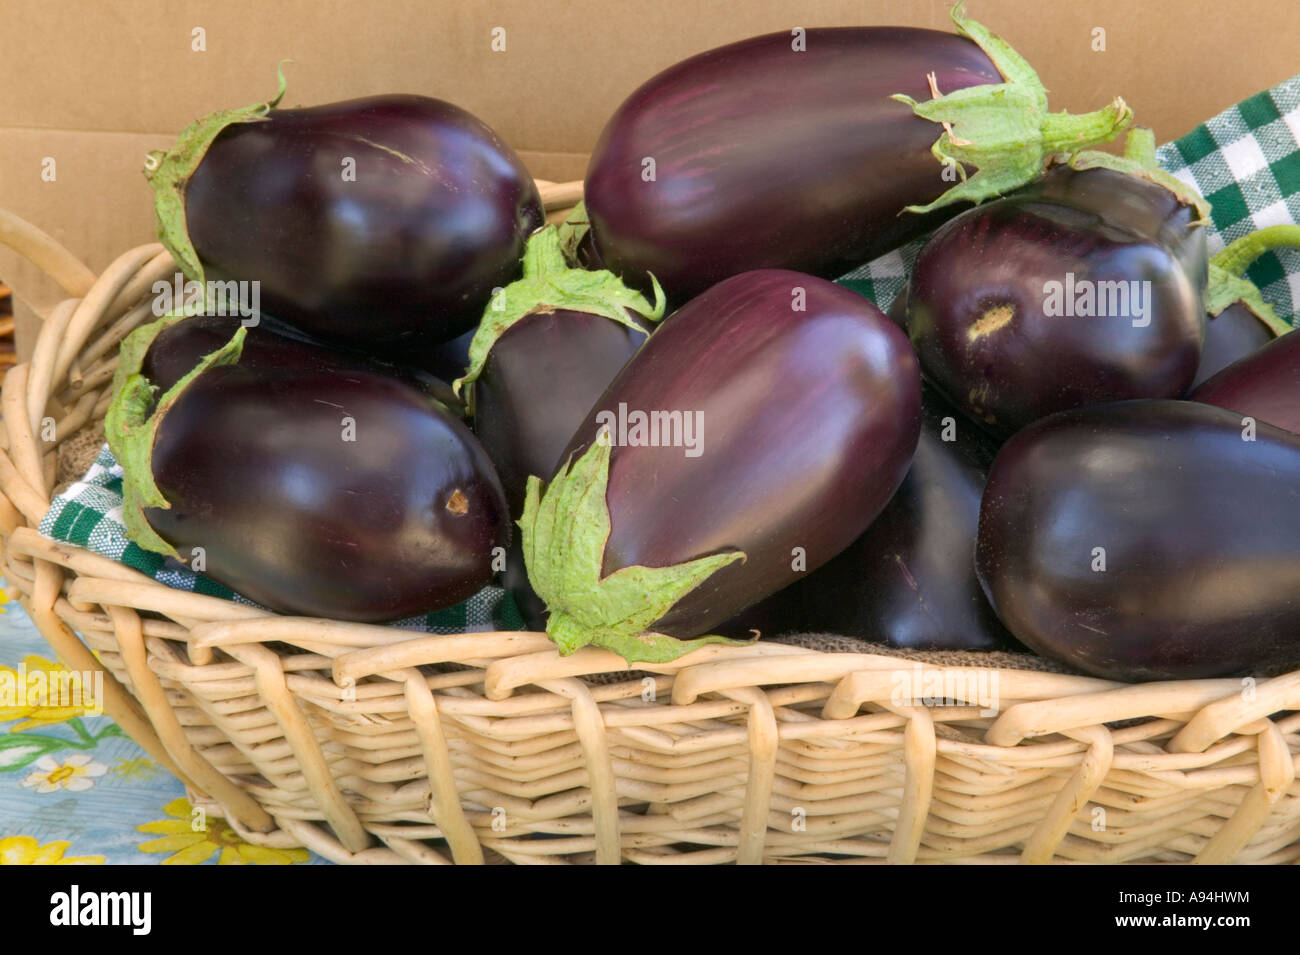 Harvested Eggplant in basket, California Stock Photo